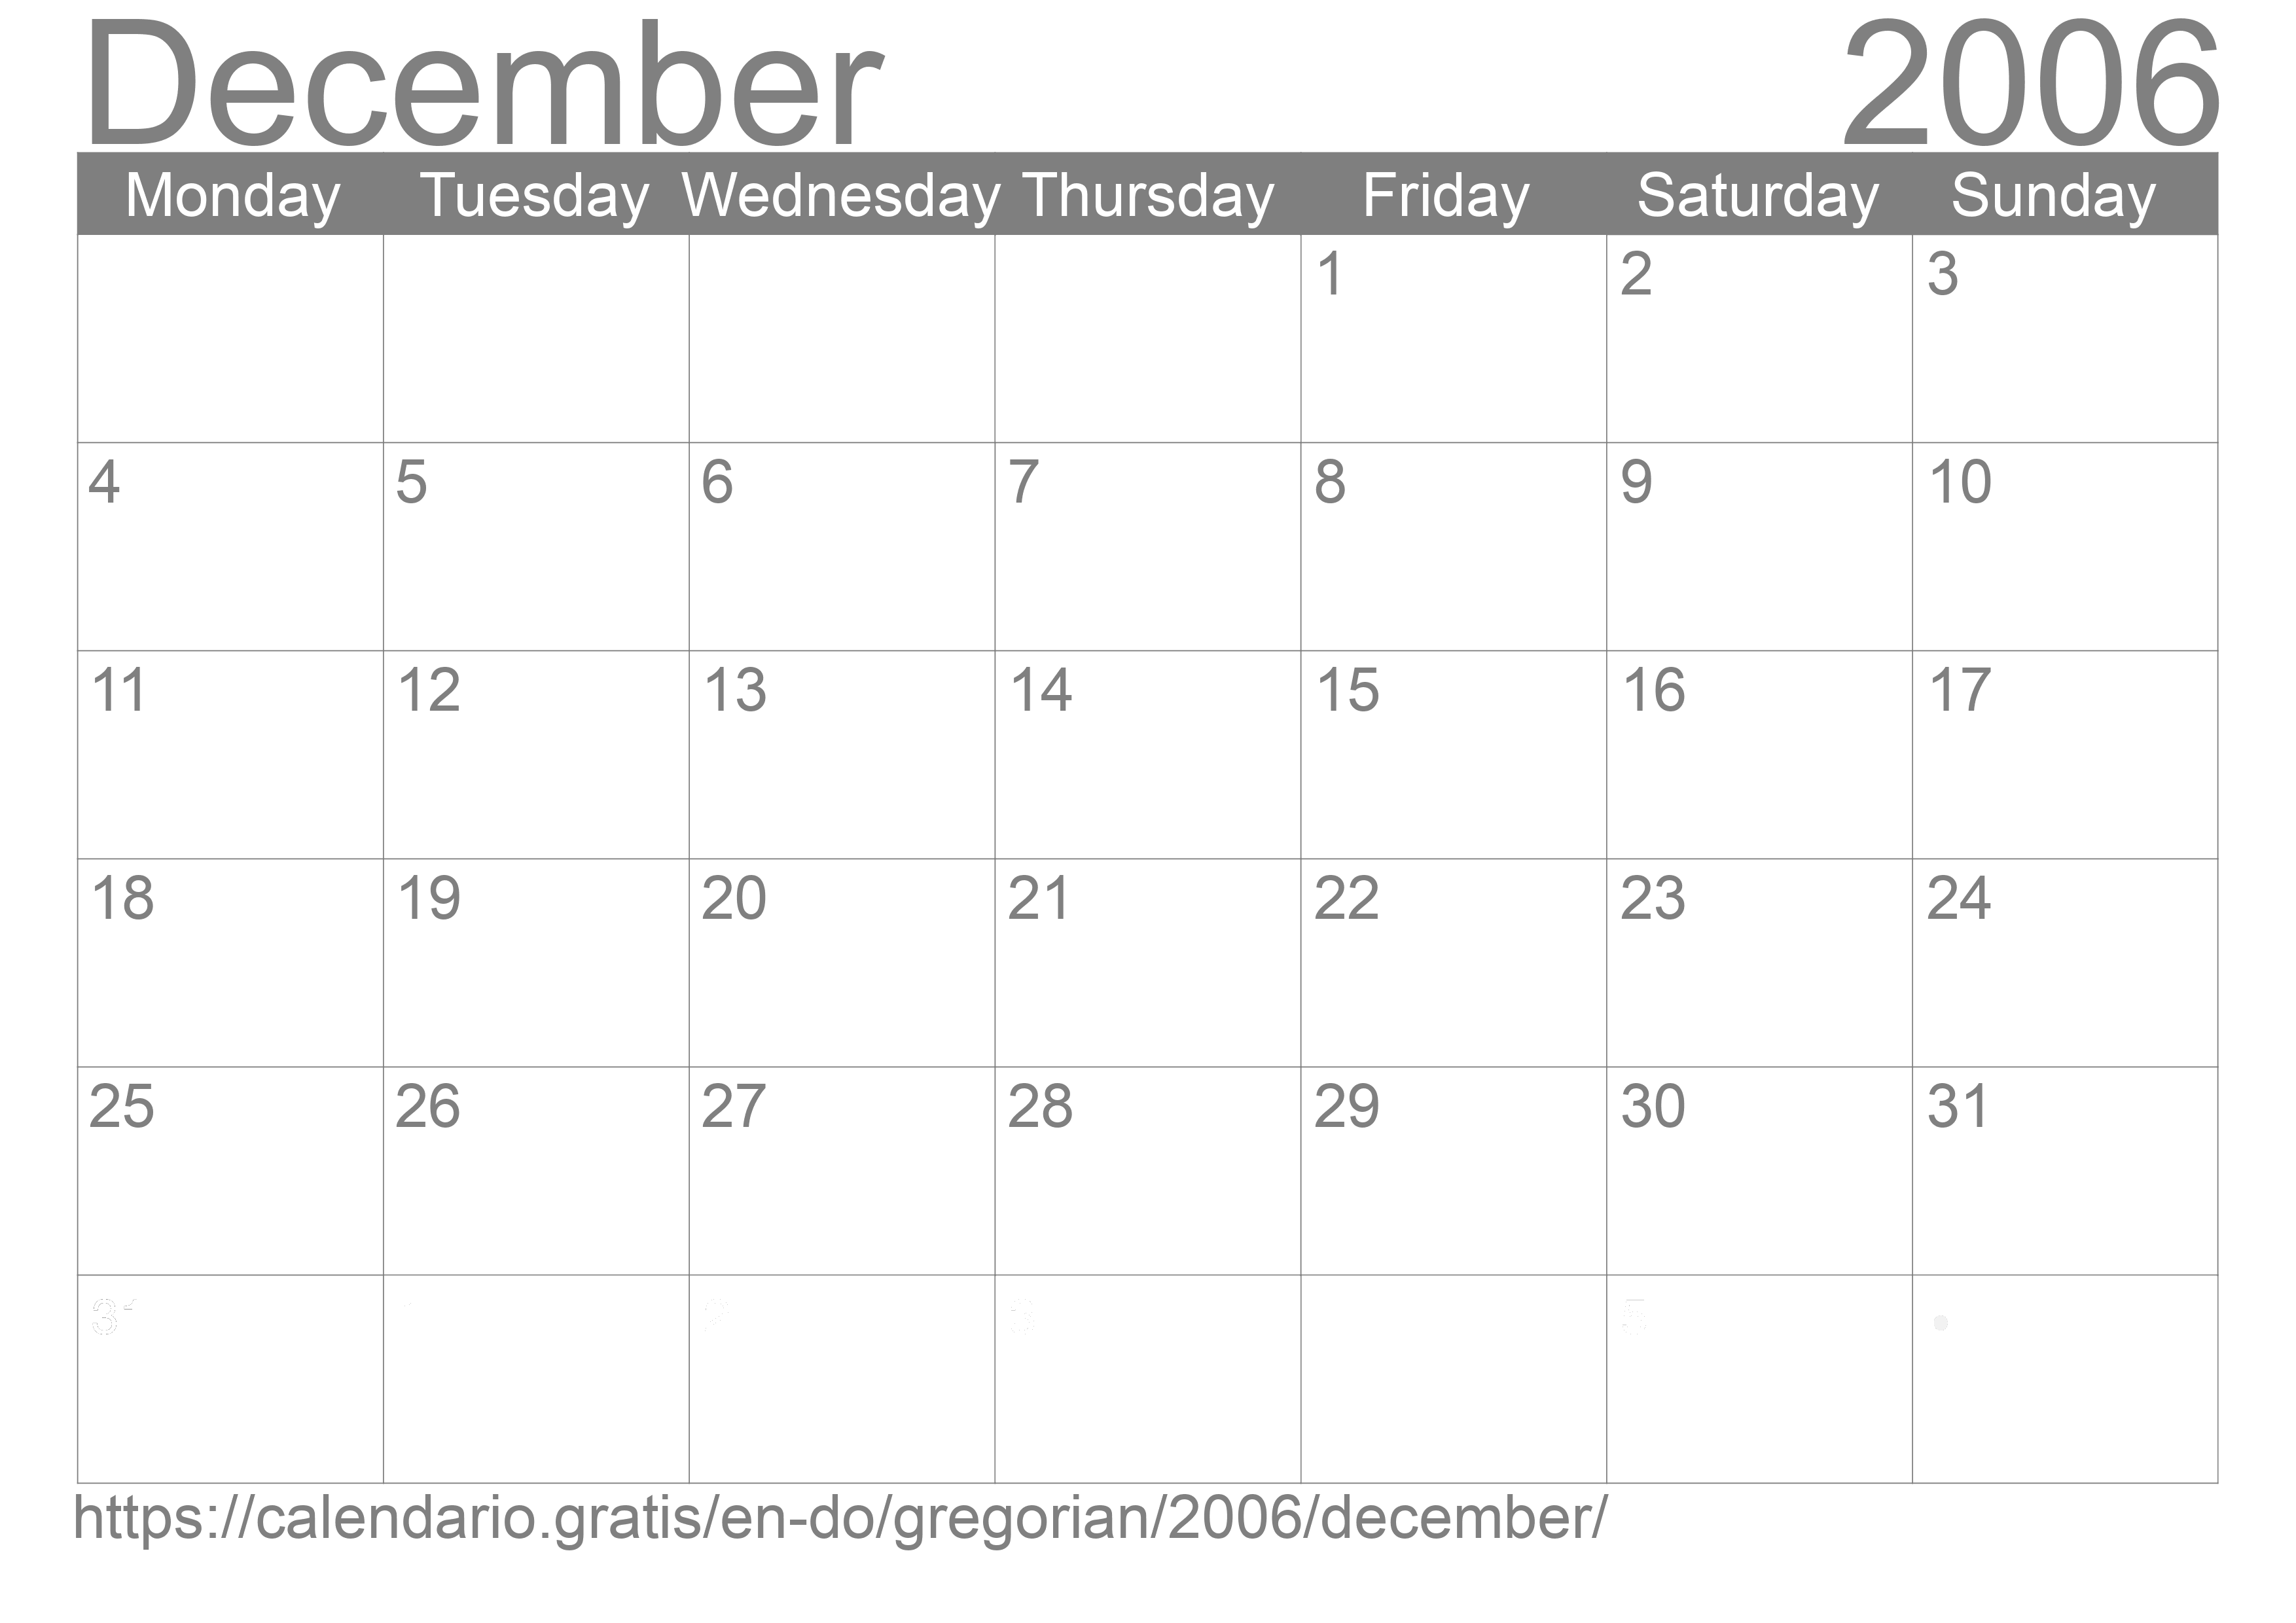 Calendar December 2006 to print